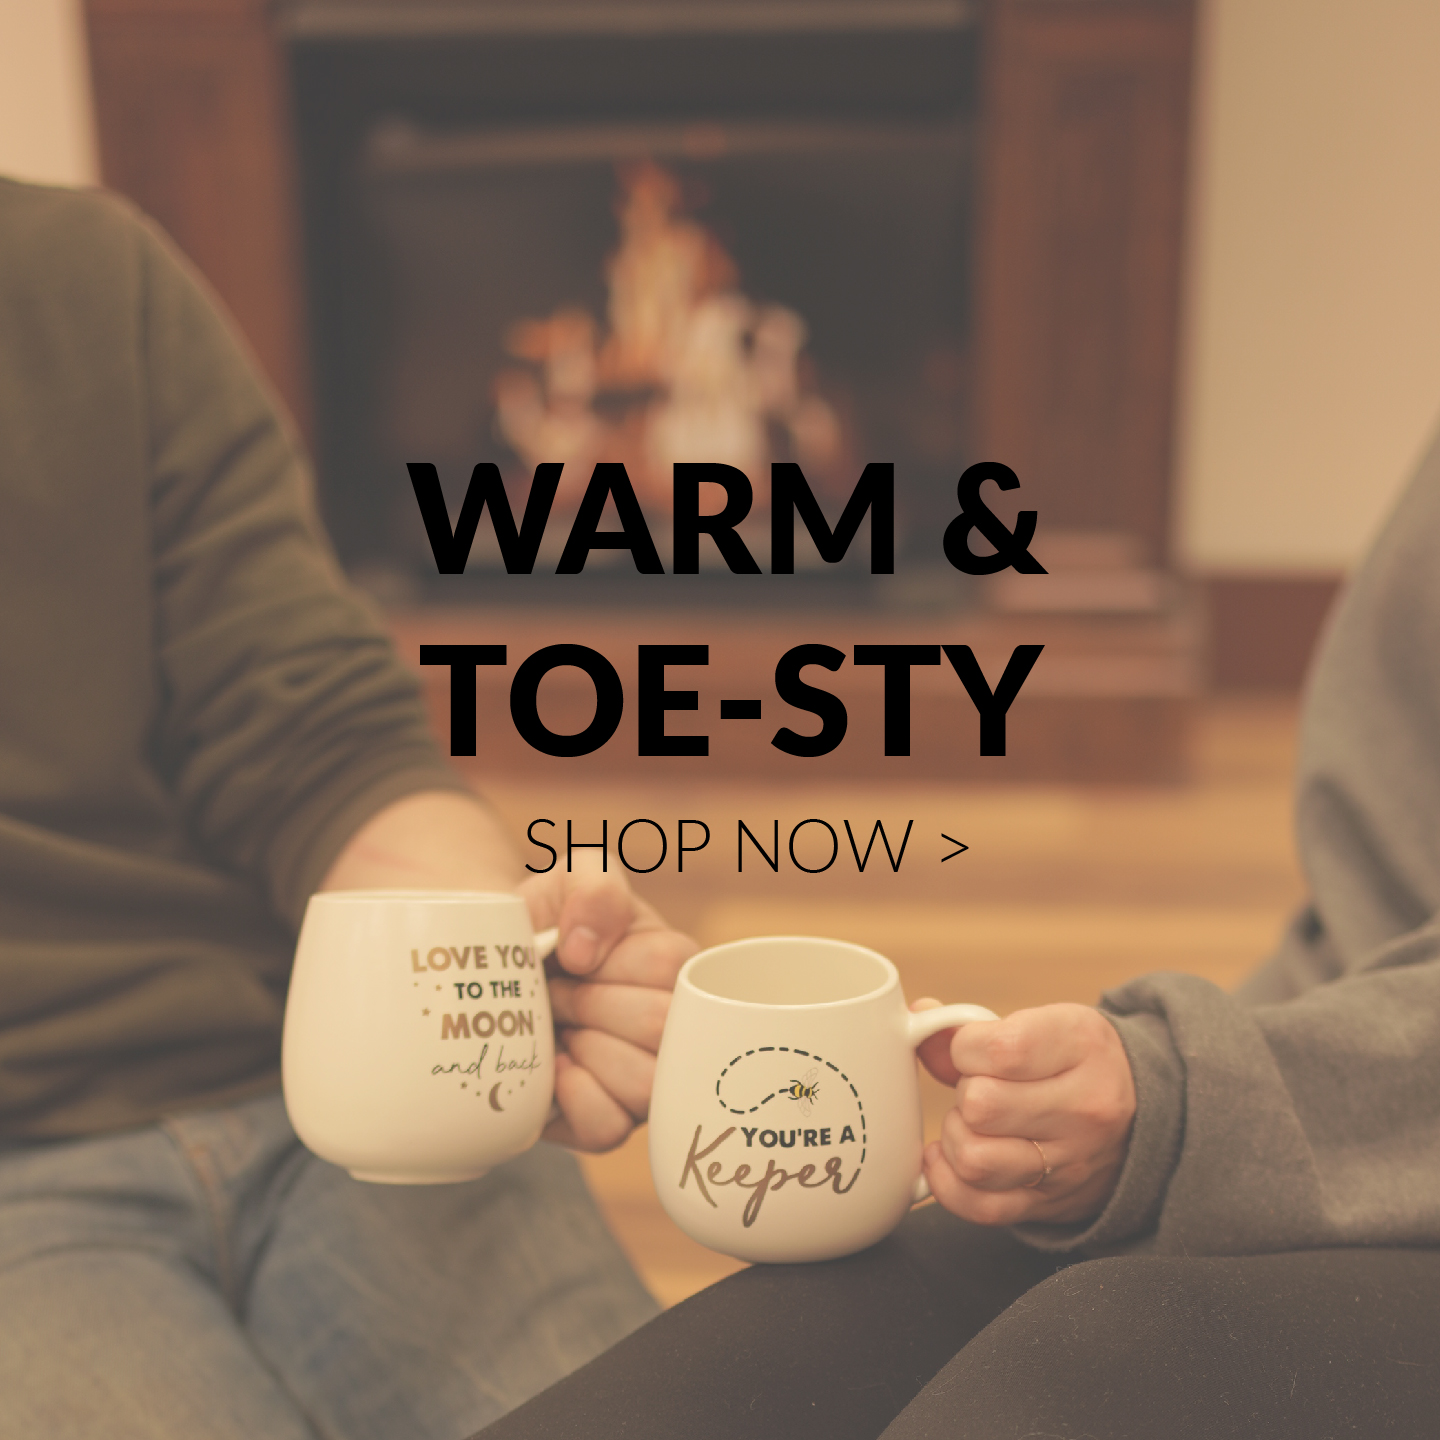 Warm & Toe-sty